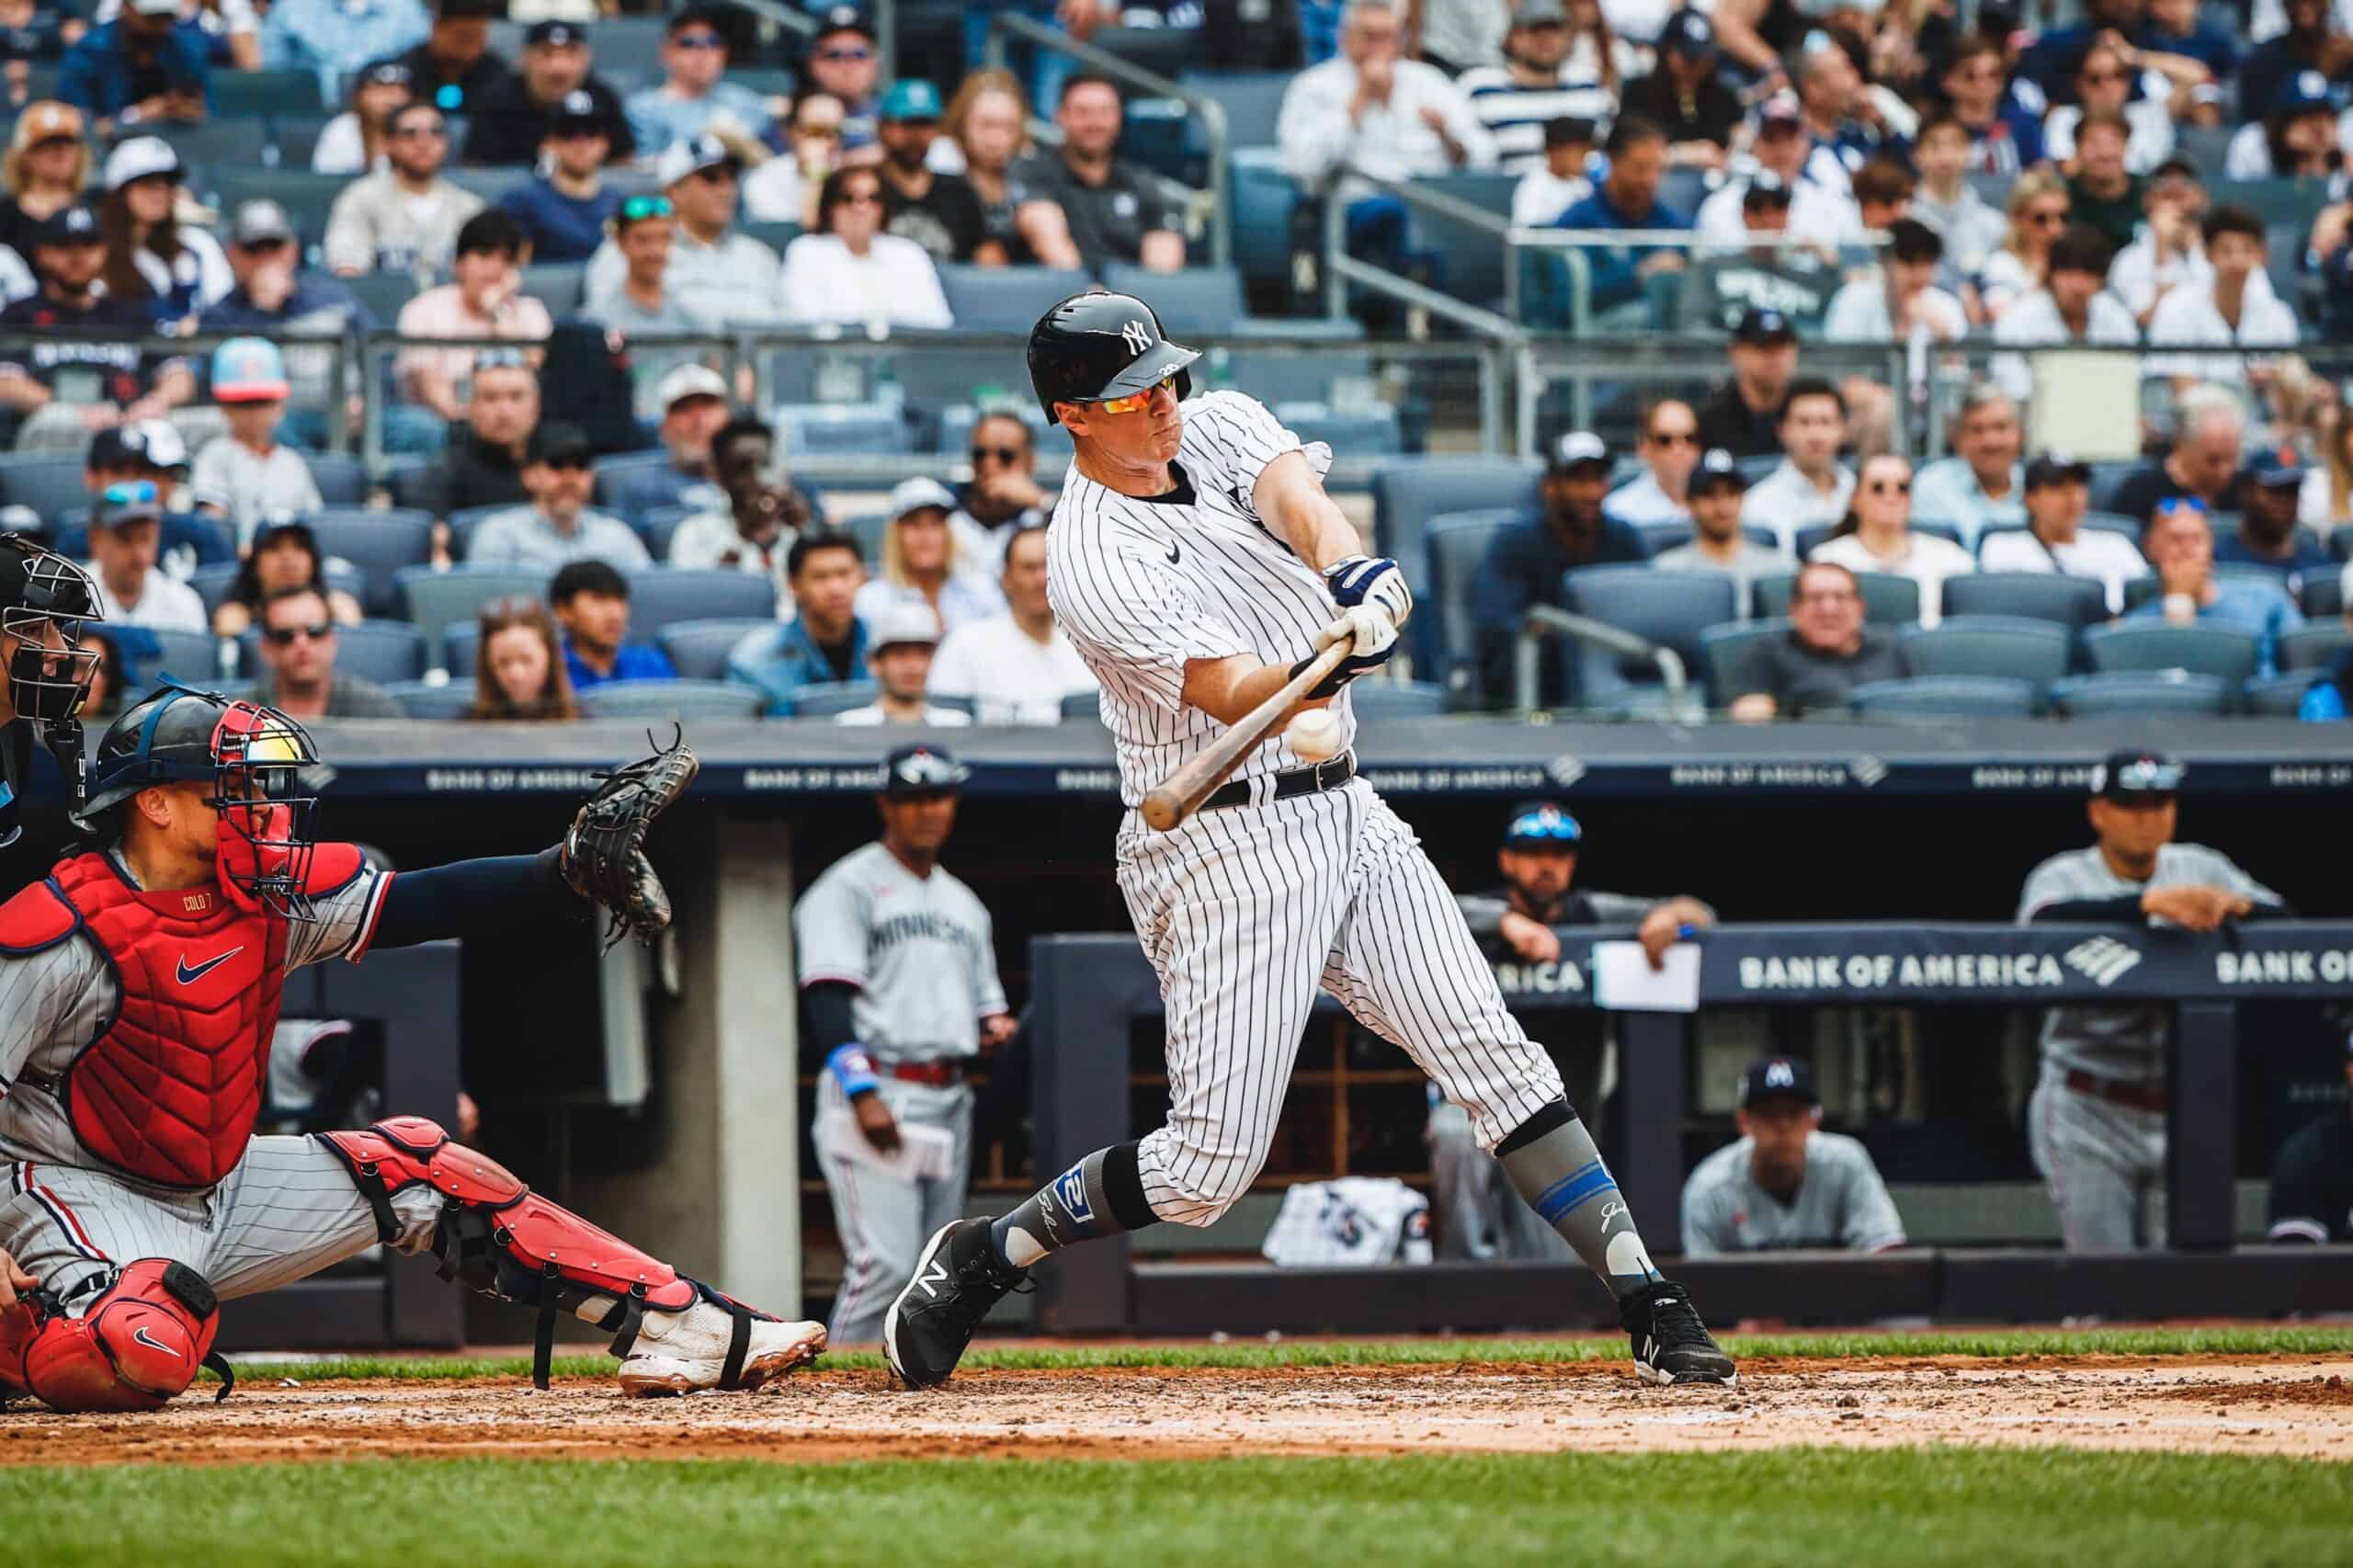 Saturday's Twins-Yankees game recap: Four-game winning streak ends